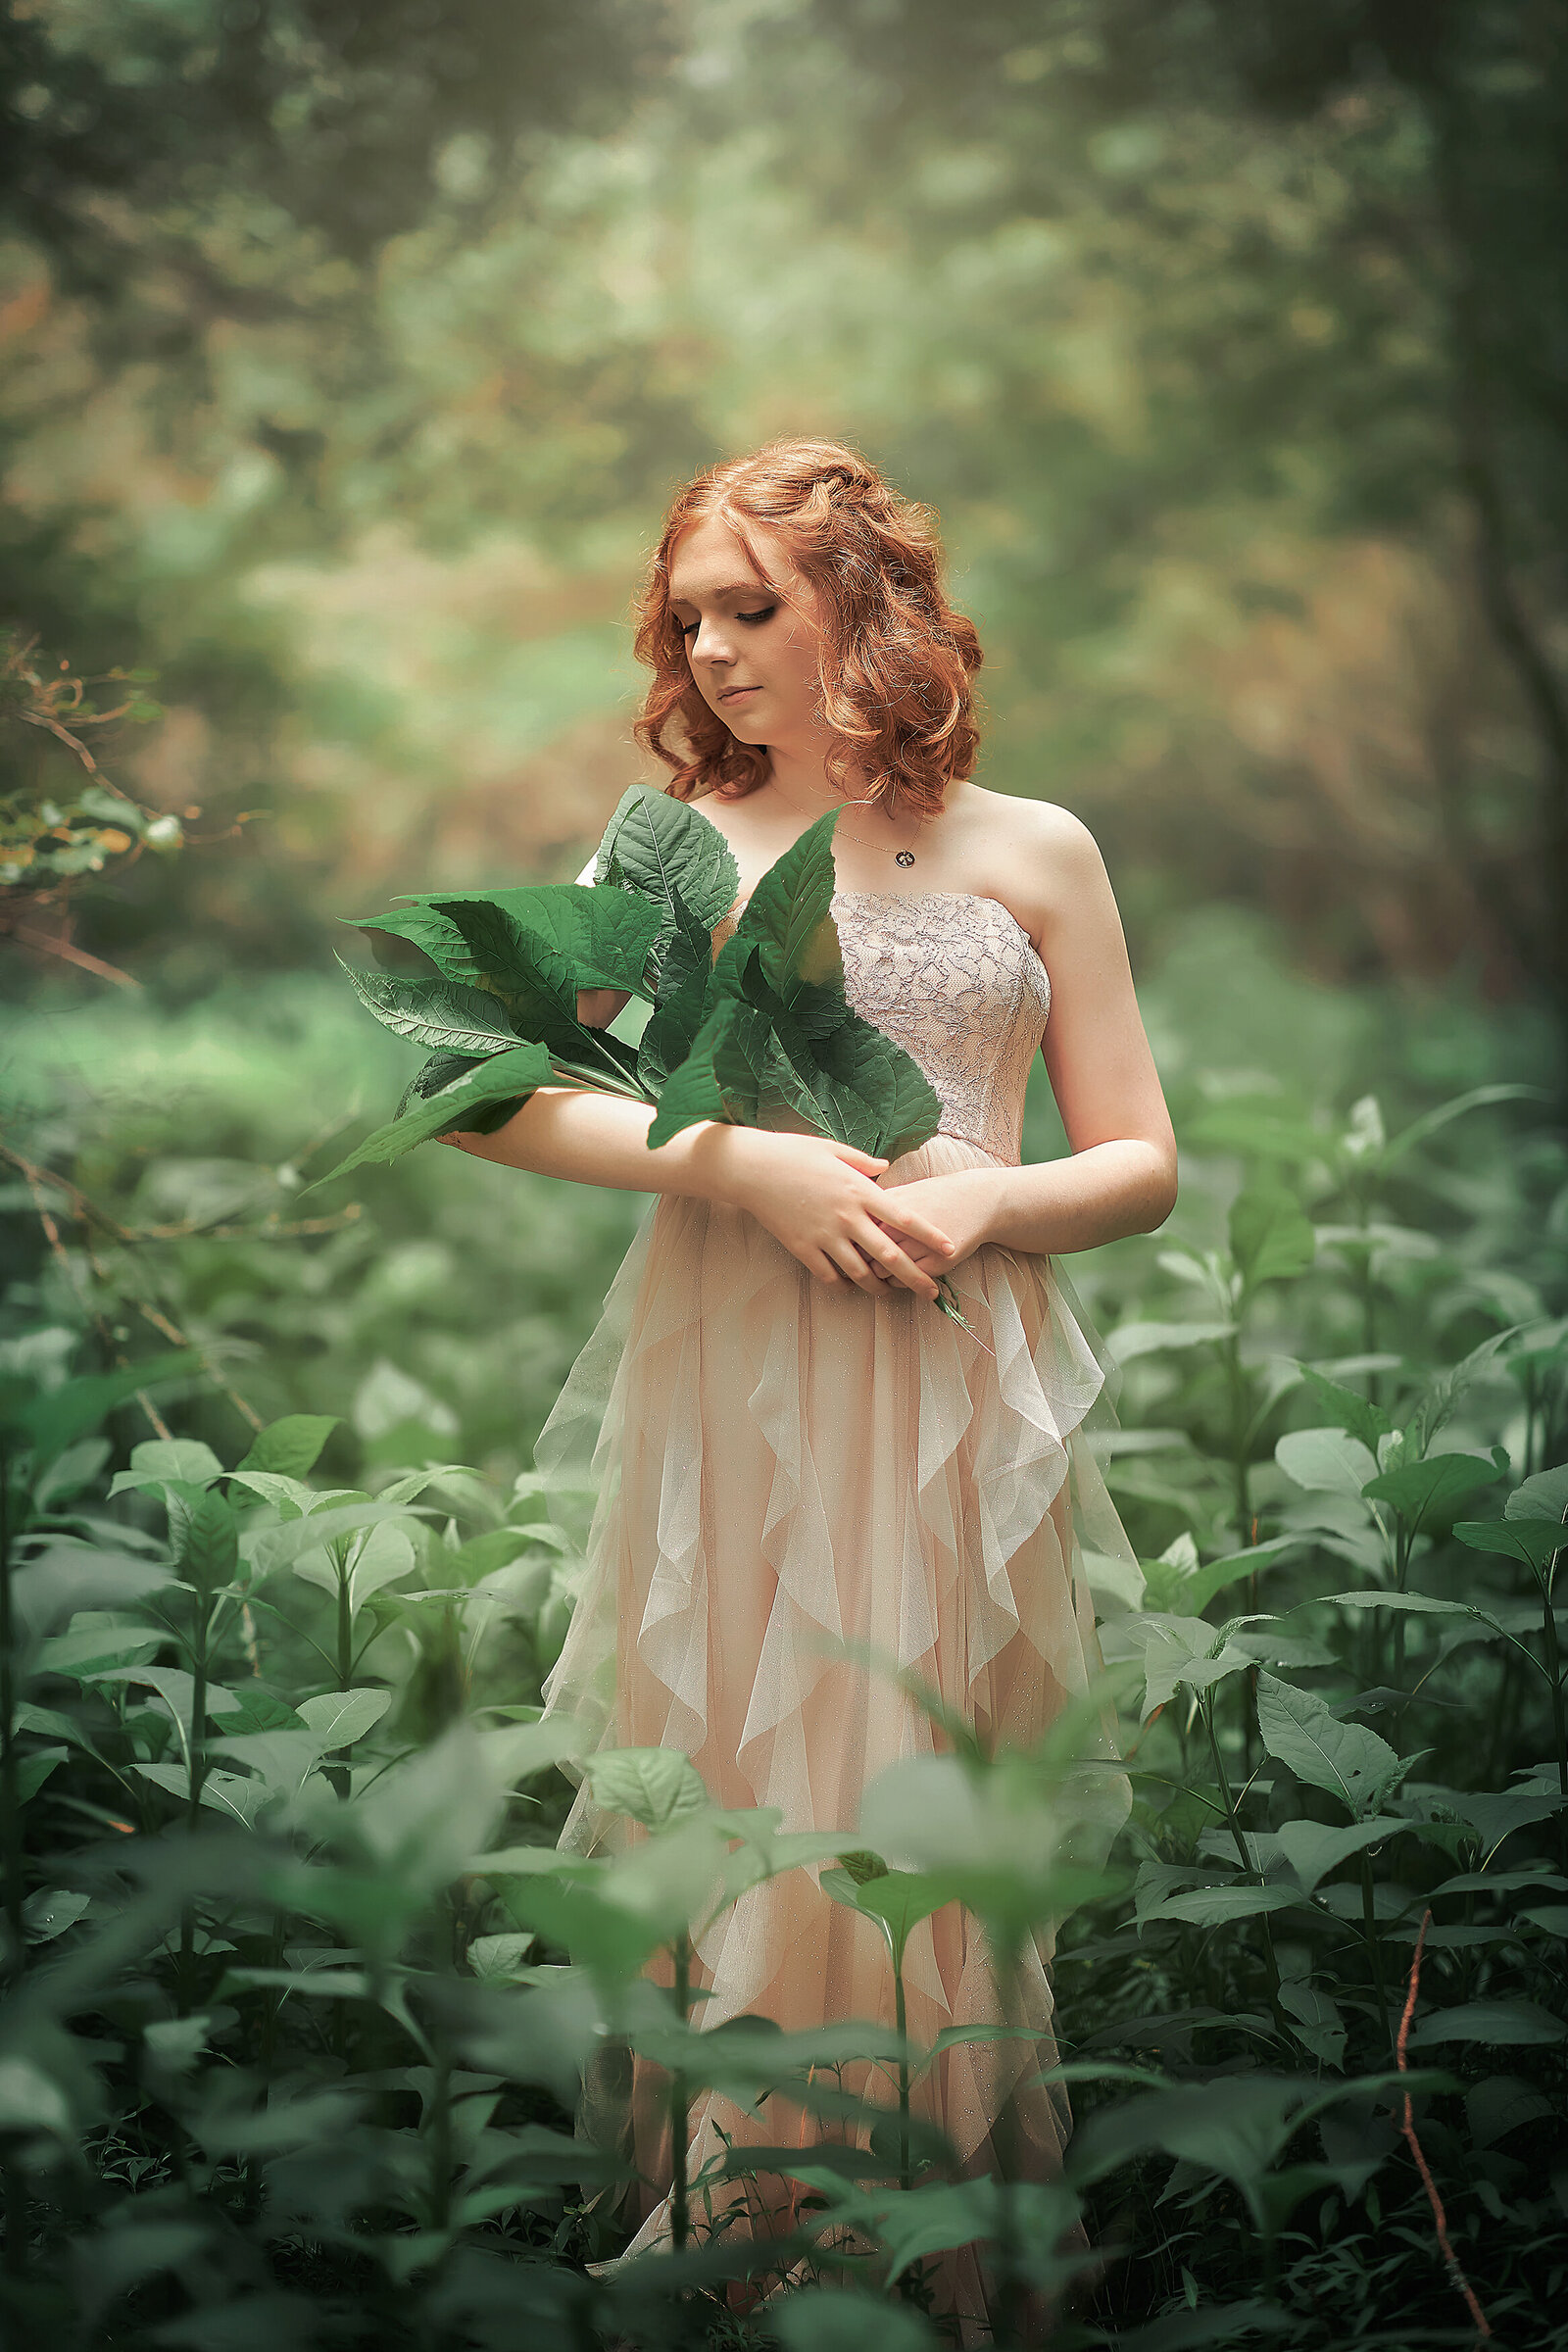 atlanta-best-award-winning-senior-girl-teen-artistic-fine-art-portrait-high-school-red-hair-outdoor-woods-dress-formal-photography-photographer-twin-rivers-04